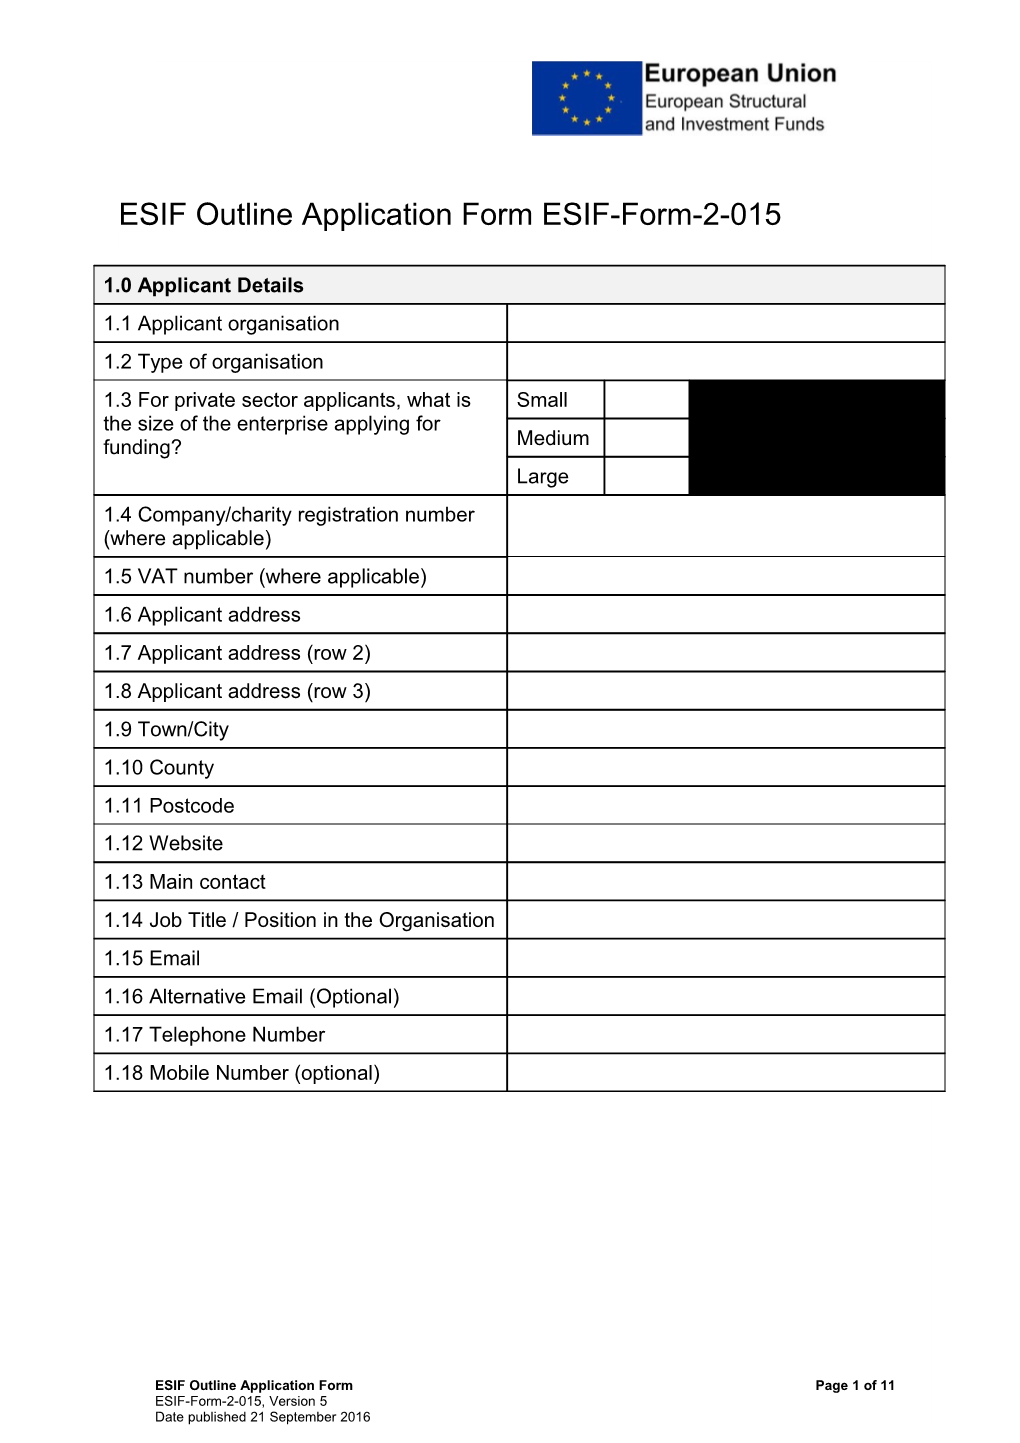 ESIF-Form-2-015 ESIF Outline Application Form V5